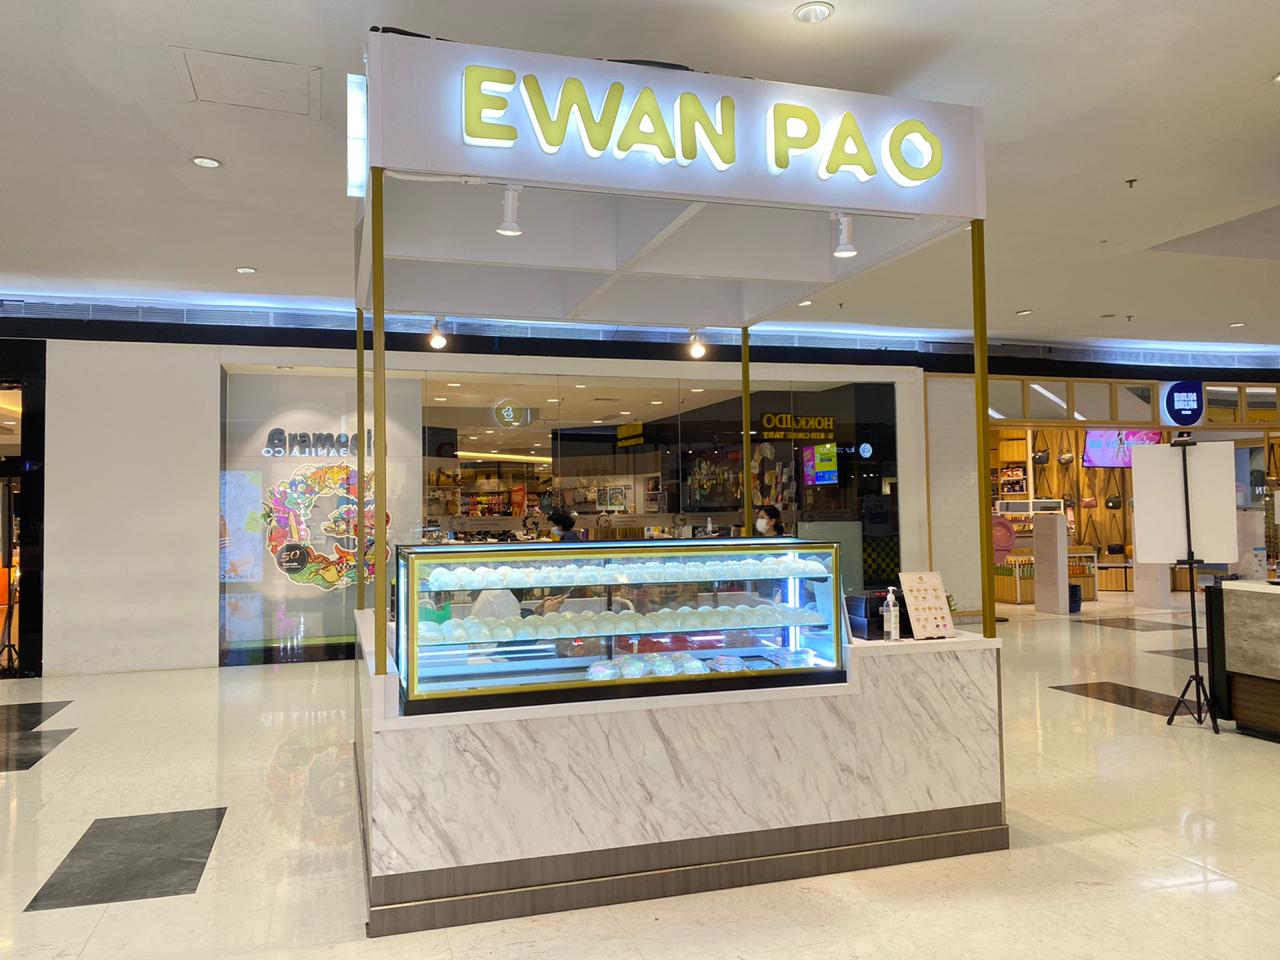 Ewan Pao shop front in lippo mall puri st. moritz